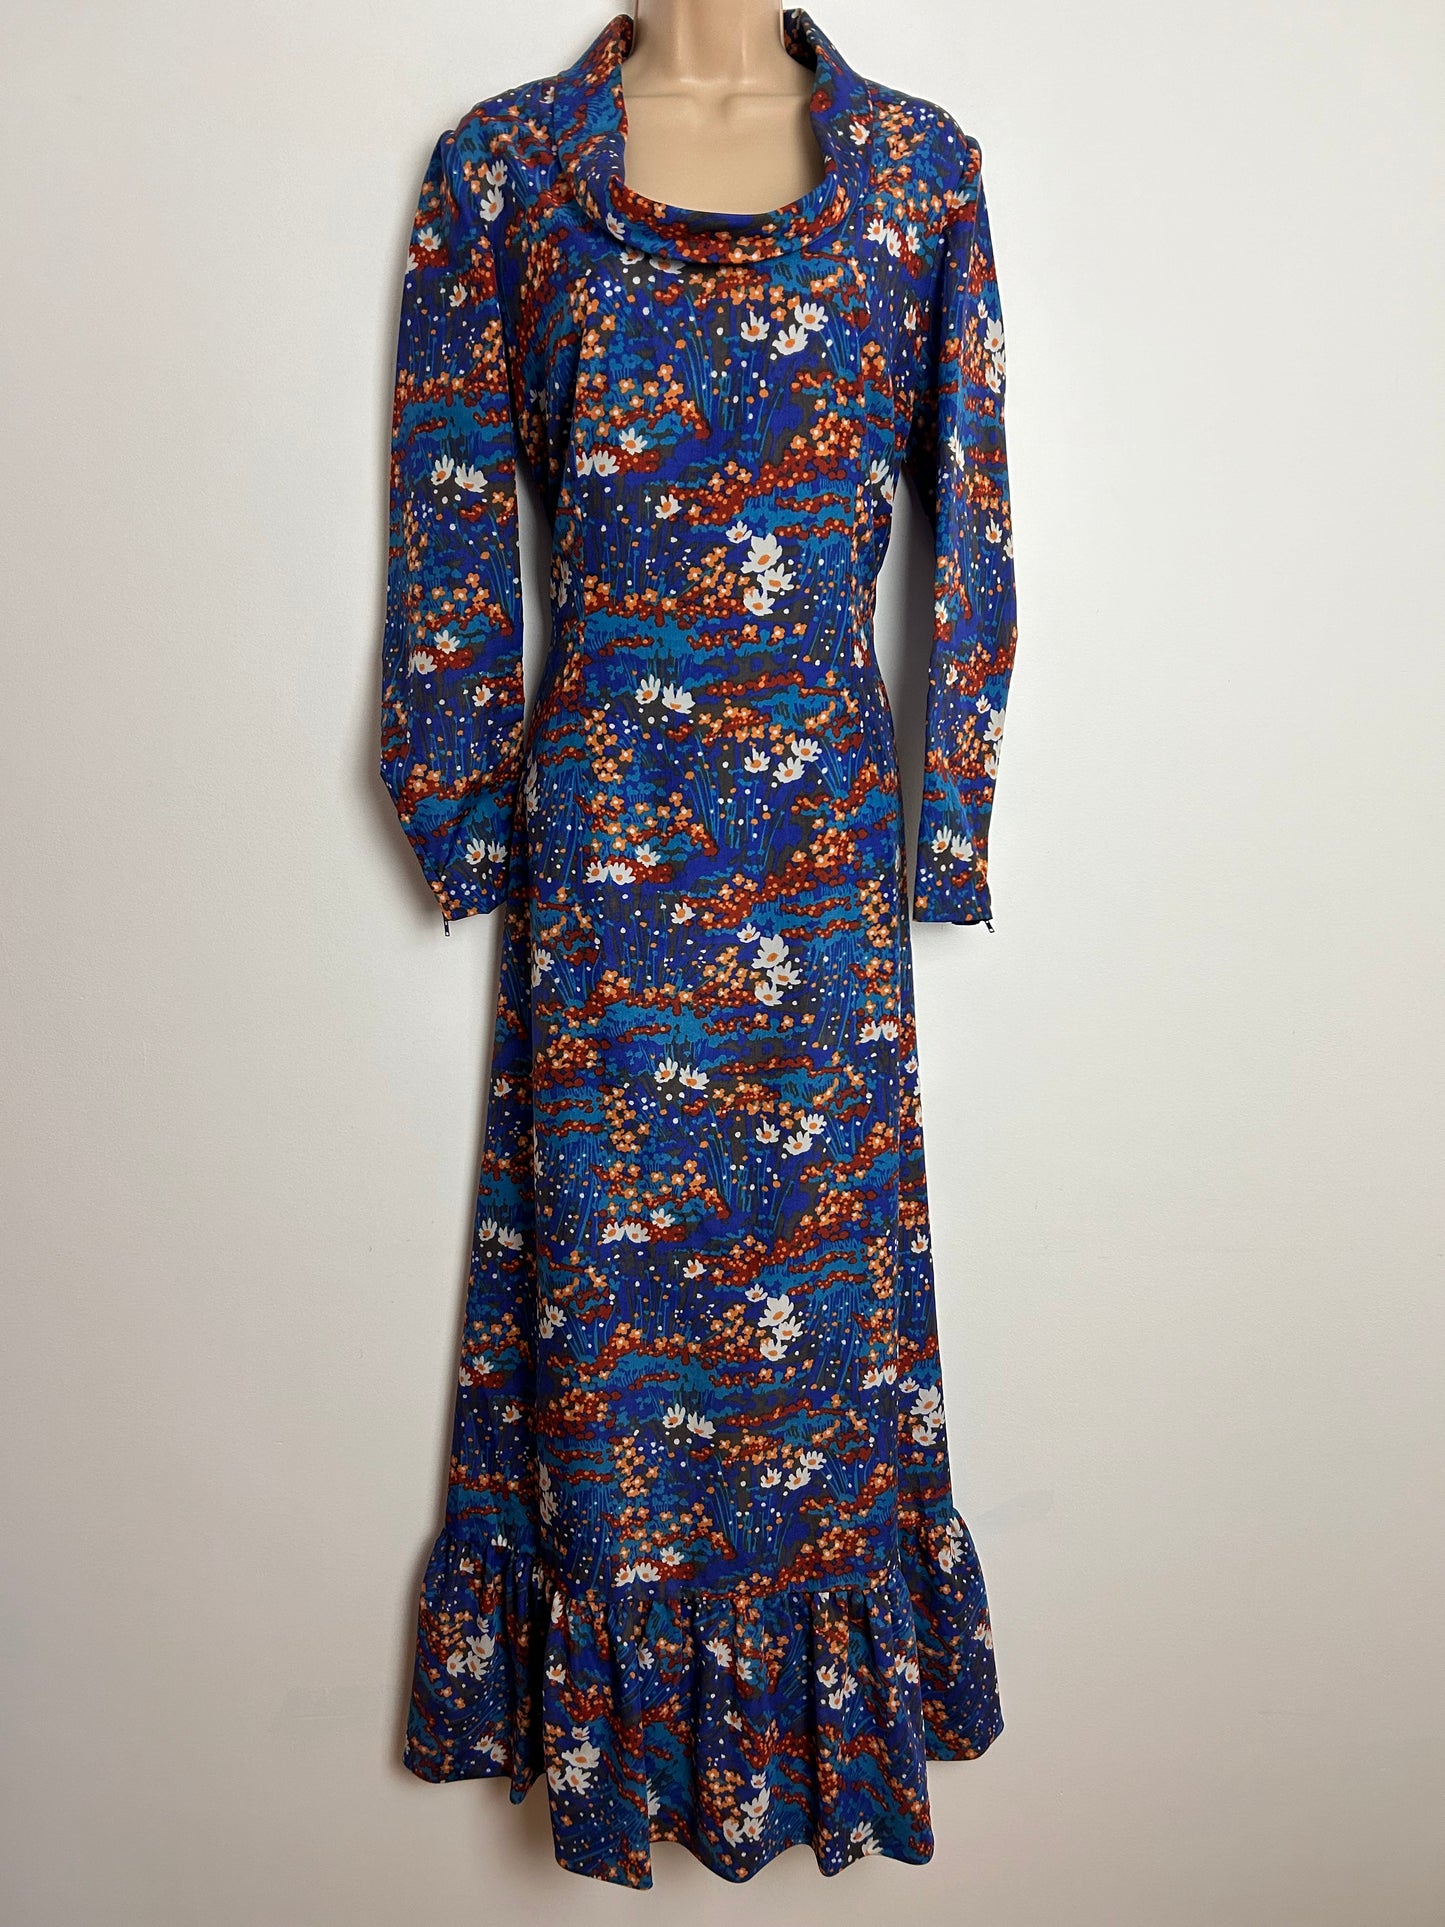 Vintage 1960s CRESTA COUTURE UK Size 12 Blue Orange Brown & White Floral Daisy Print Long Sleeve Maxi Dress